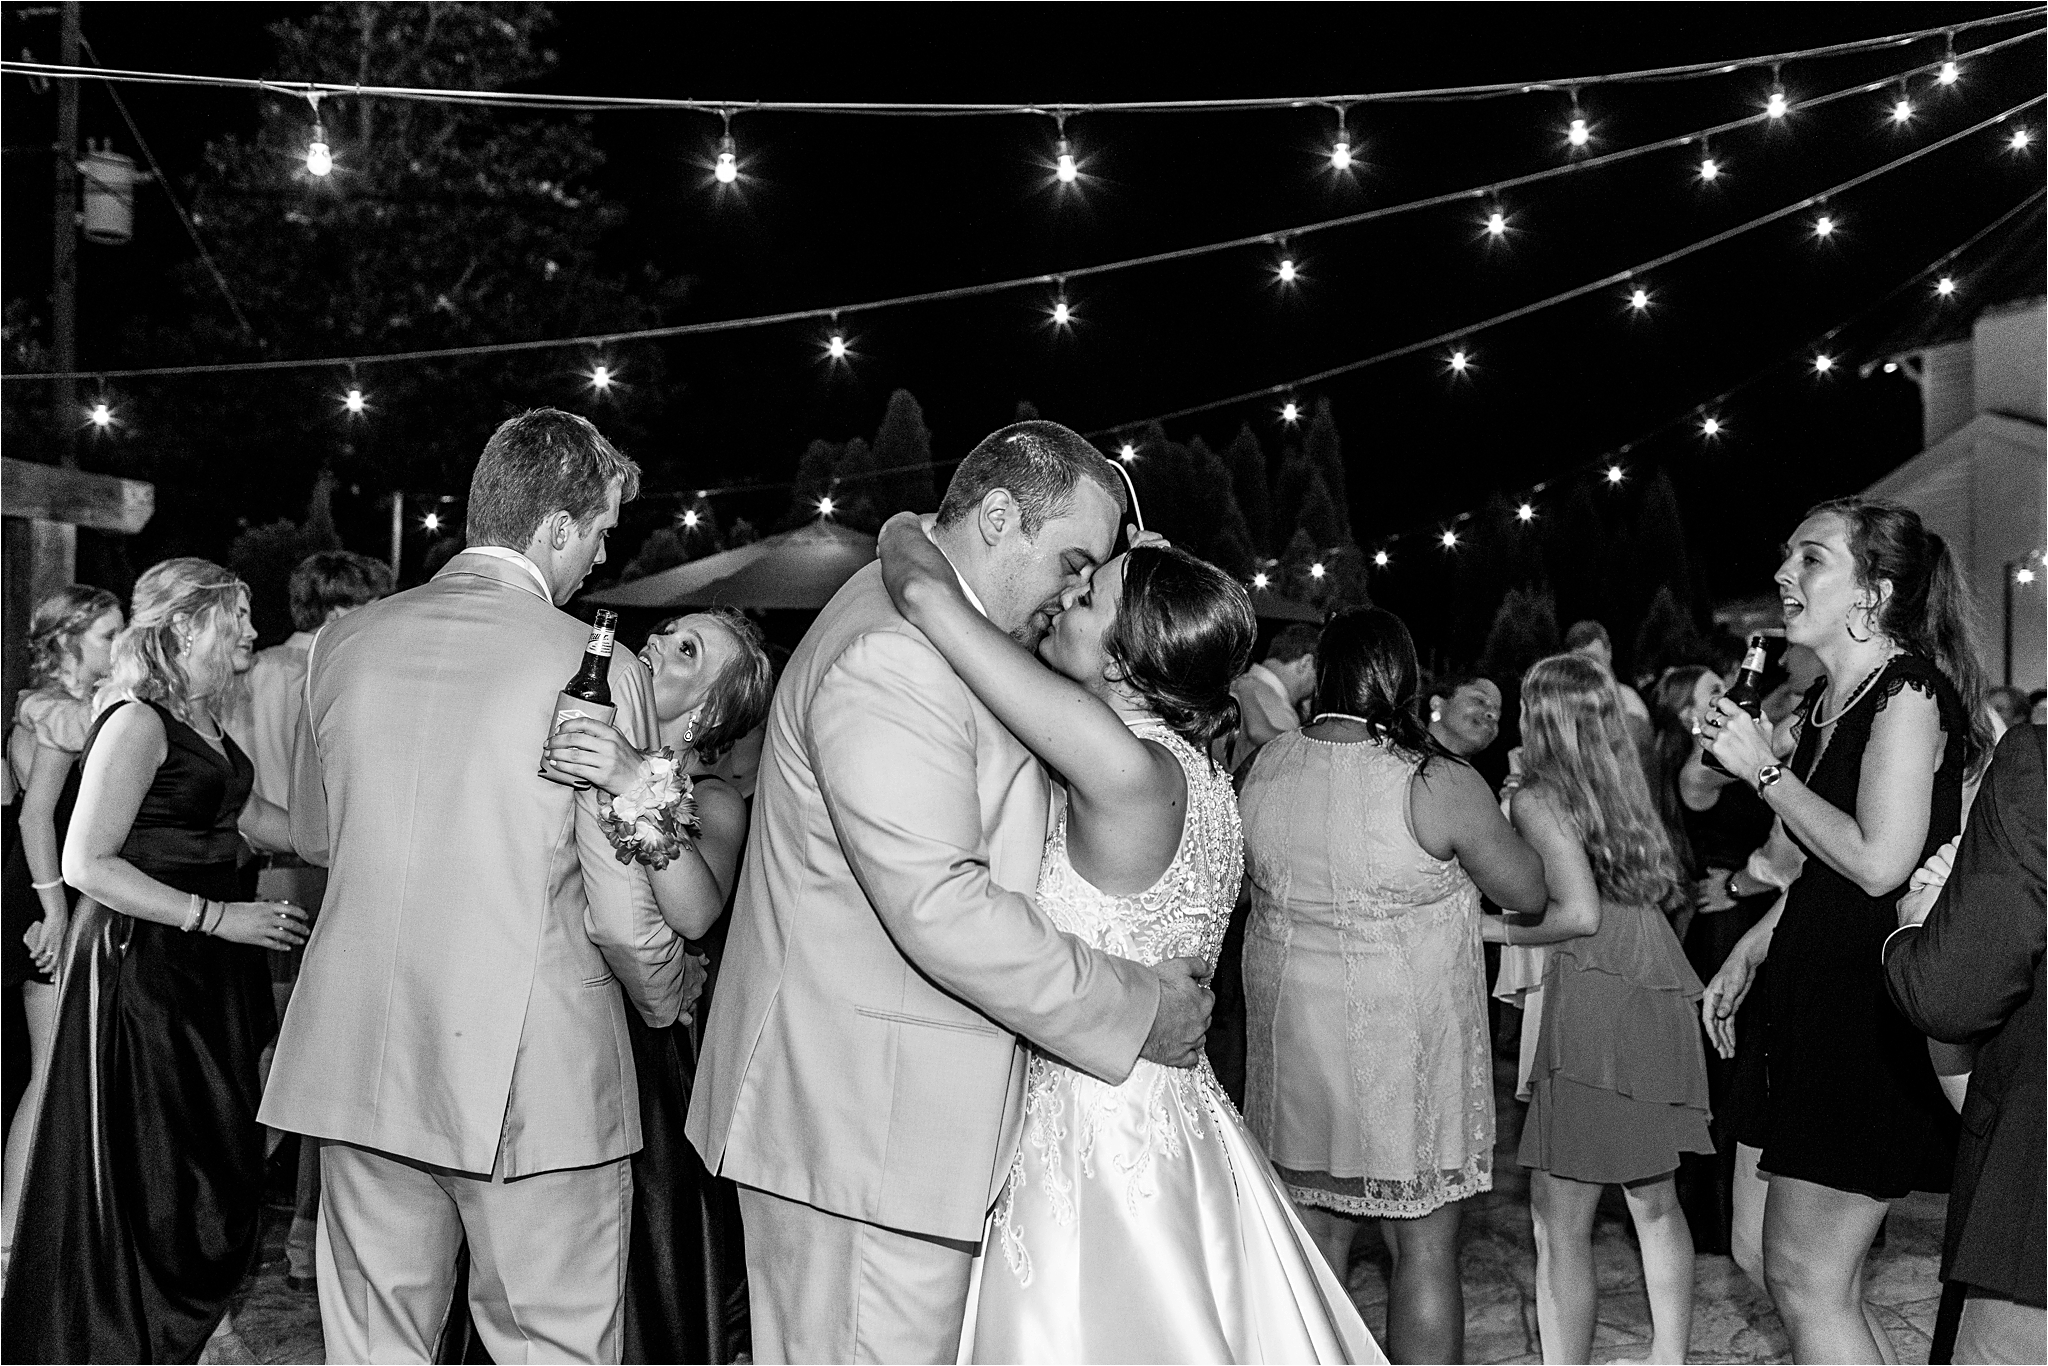 Sonnet House | Birmingham Alabama Wedding Photographer | Courtney + Ben